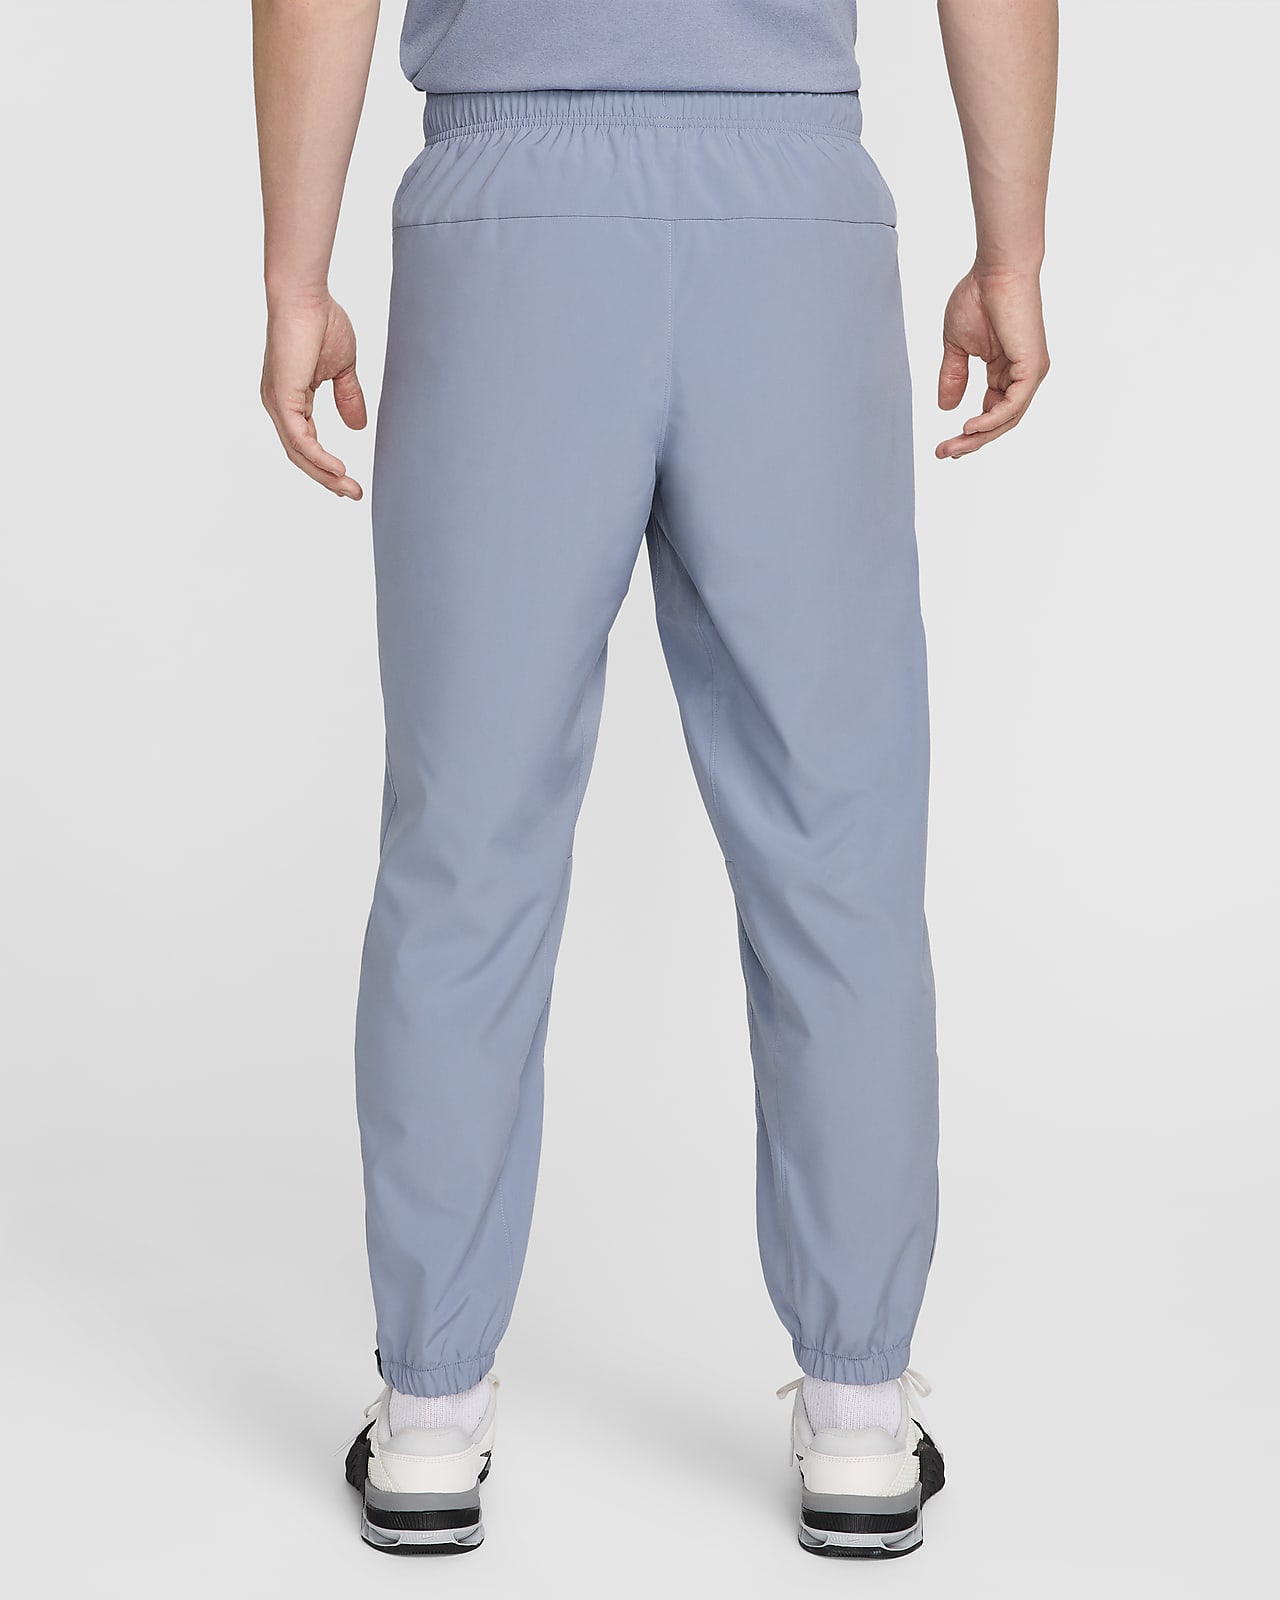 Nike Men's Totality Dri-FIT Tapered Pants